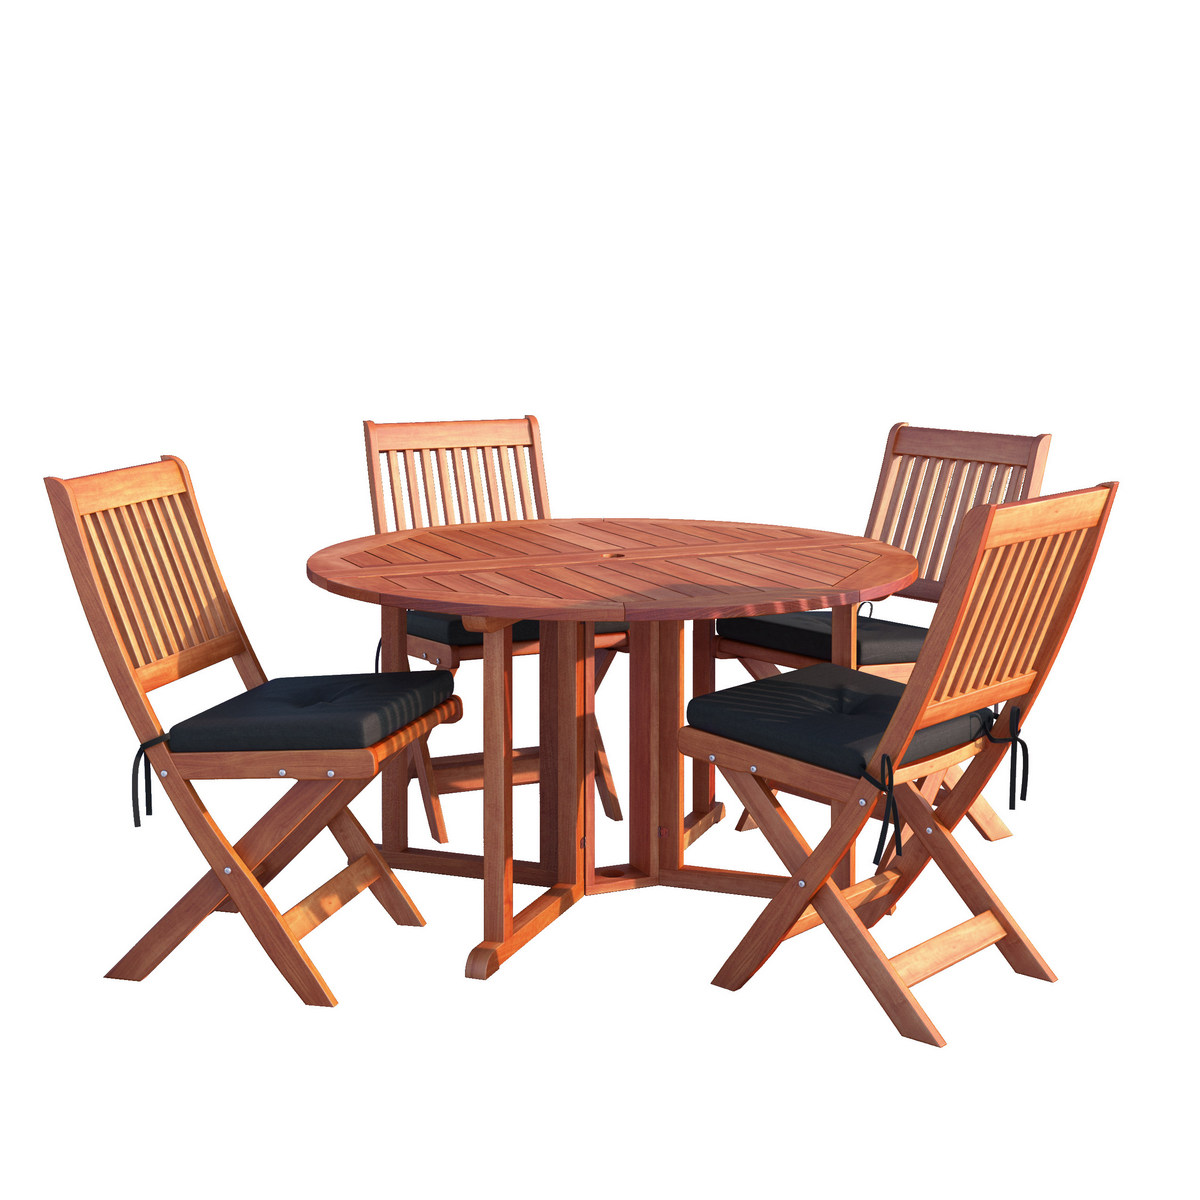 Corliving Pex-369-z Miramar 5pc Cinnamon Brown Hardwood Outdoor Folding Dining Set